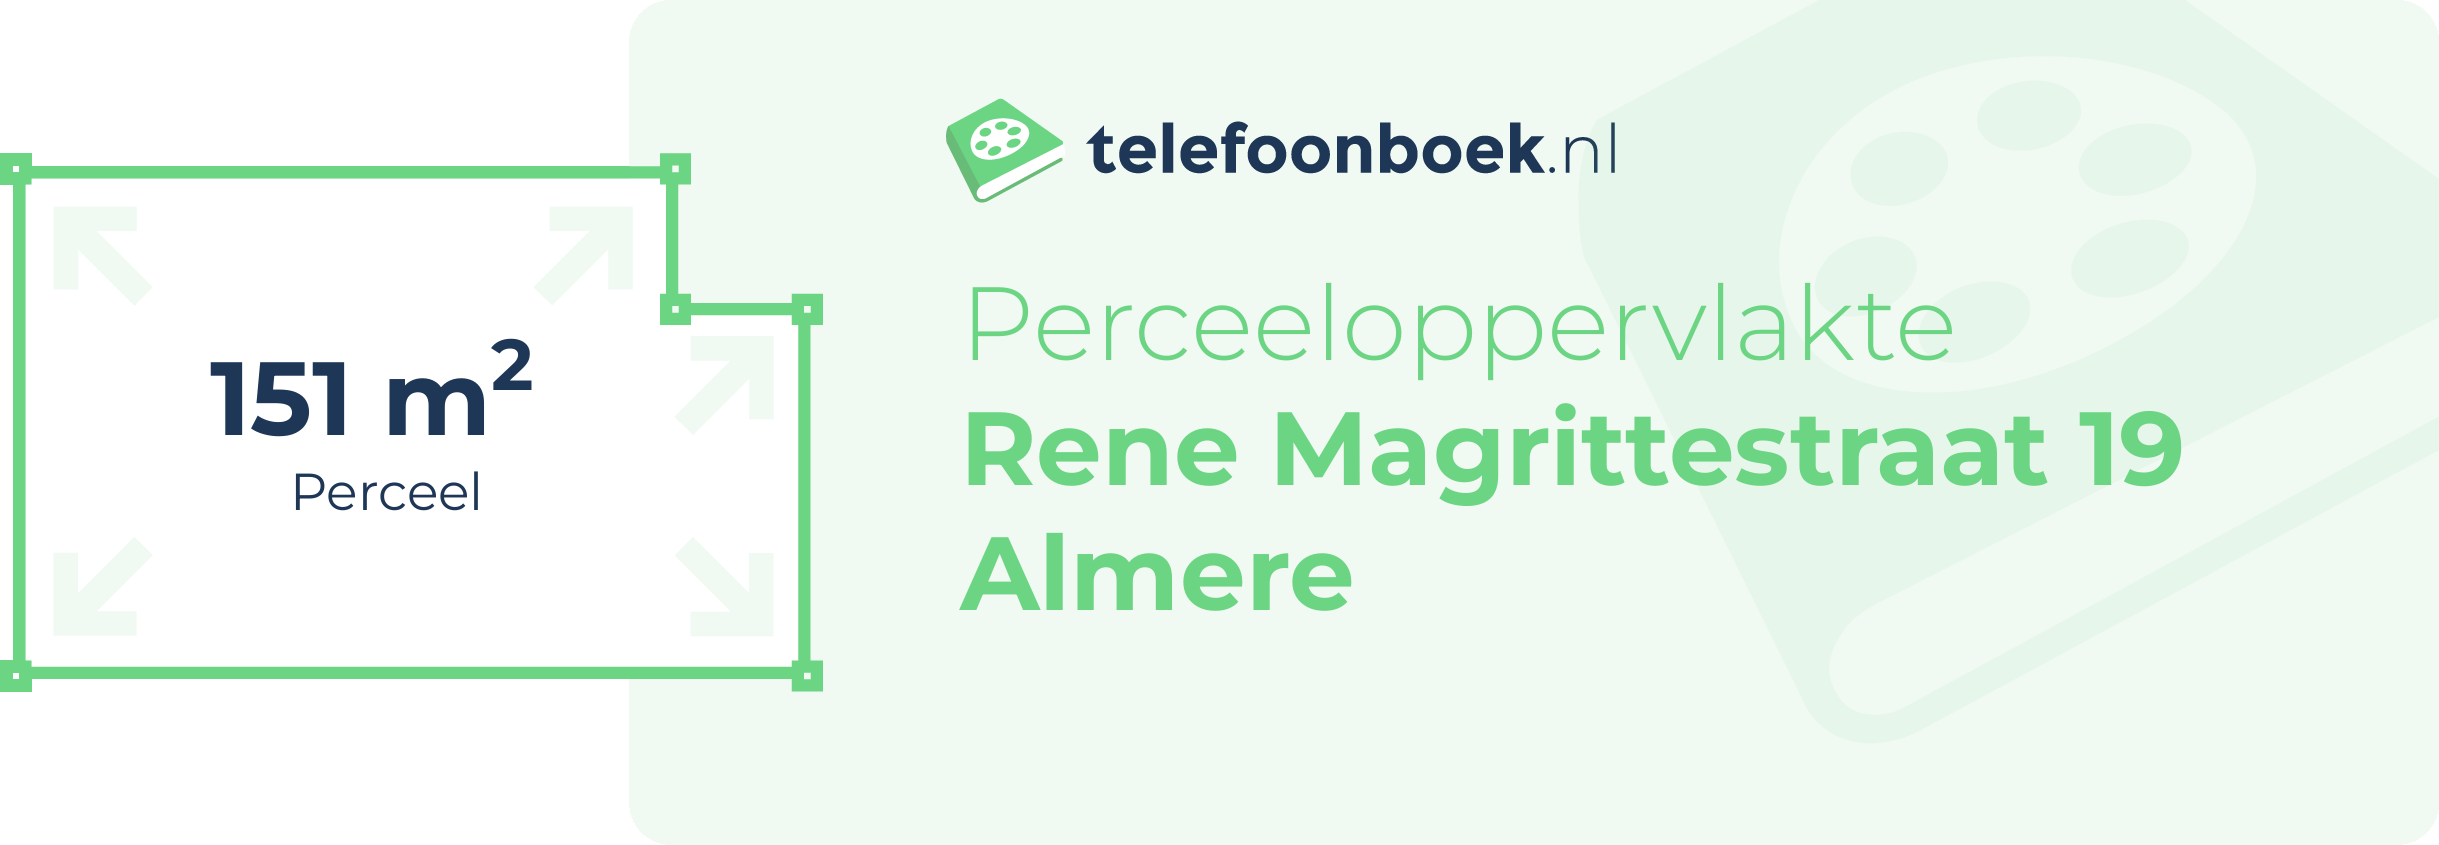 Perceeloppervlakte Rene Magrittestraat 19 Almere